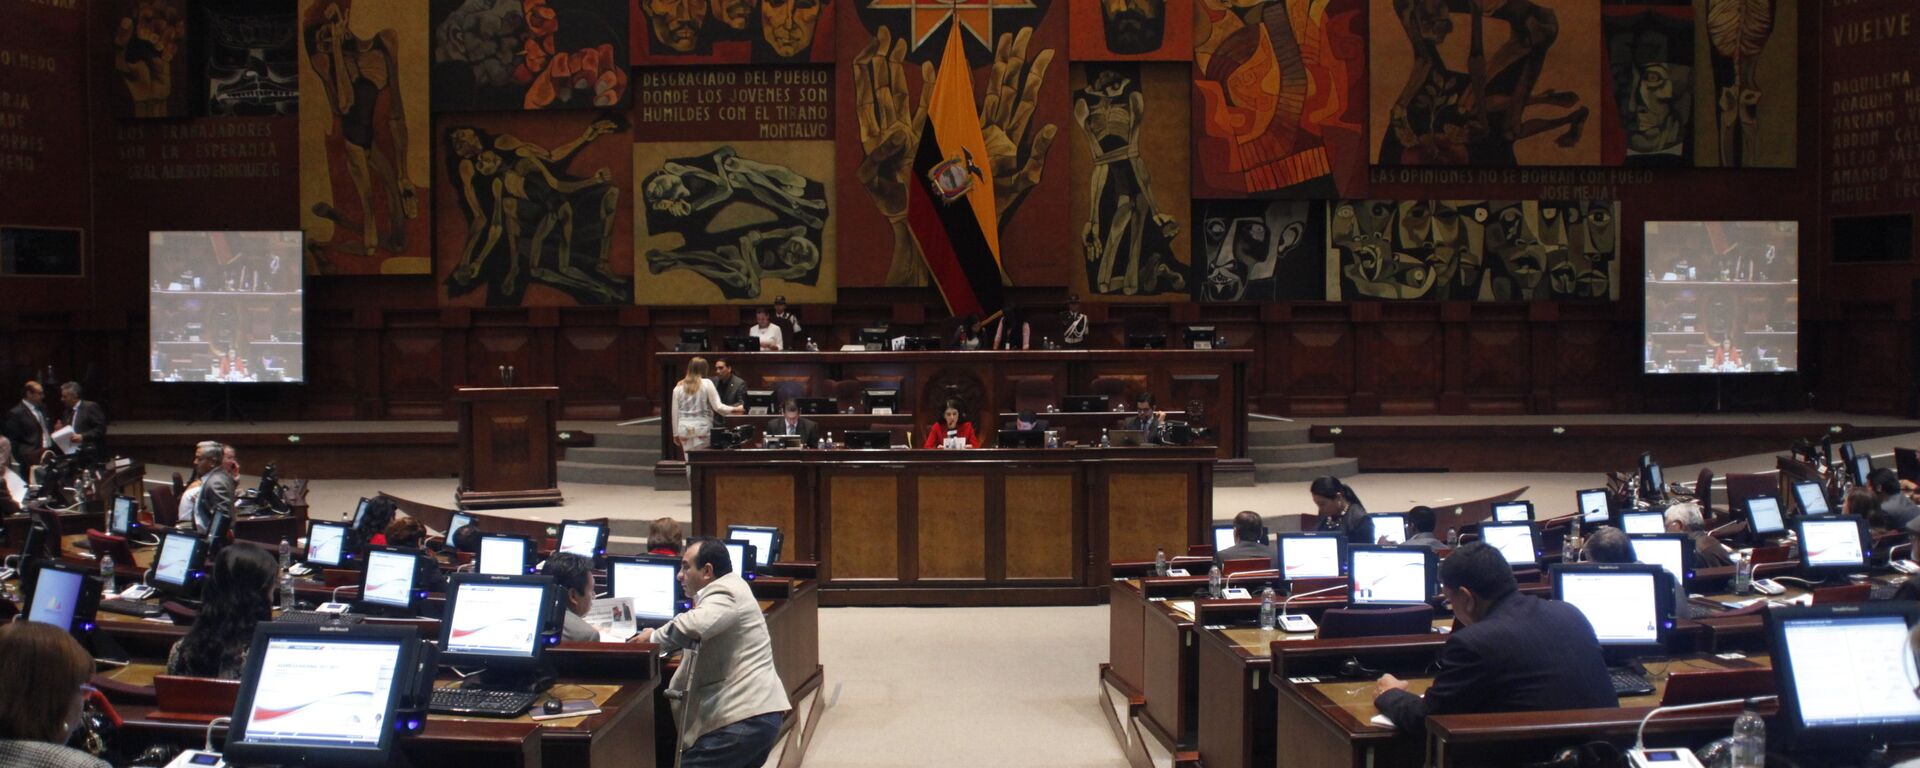 La Asamblea Nacional de Ecuador (archivo) - Sputnik Mundo, 1920, 17.11.2019